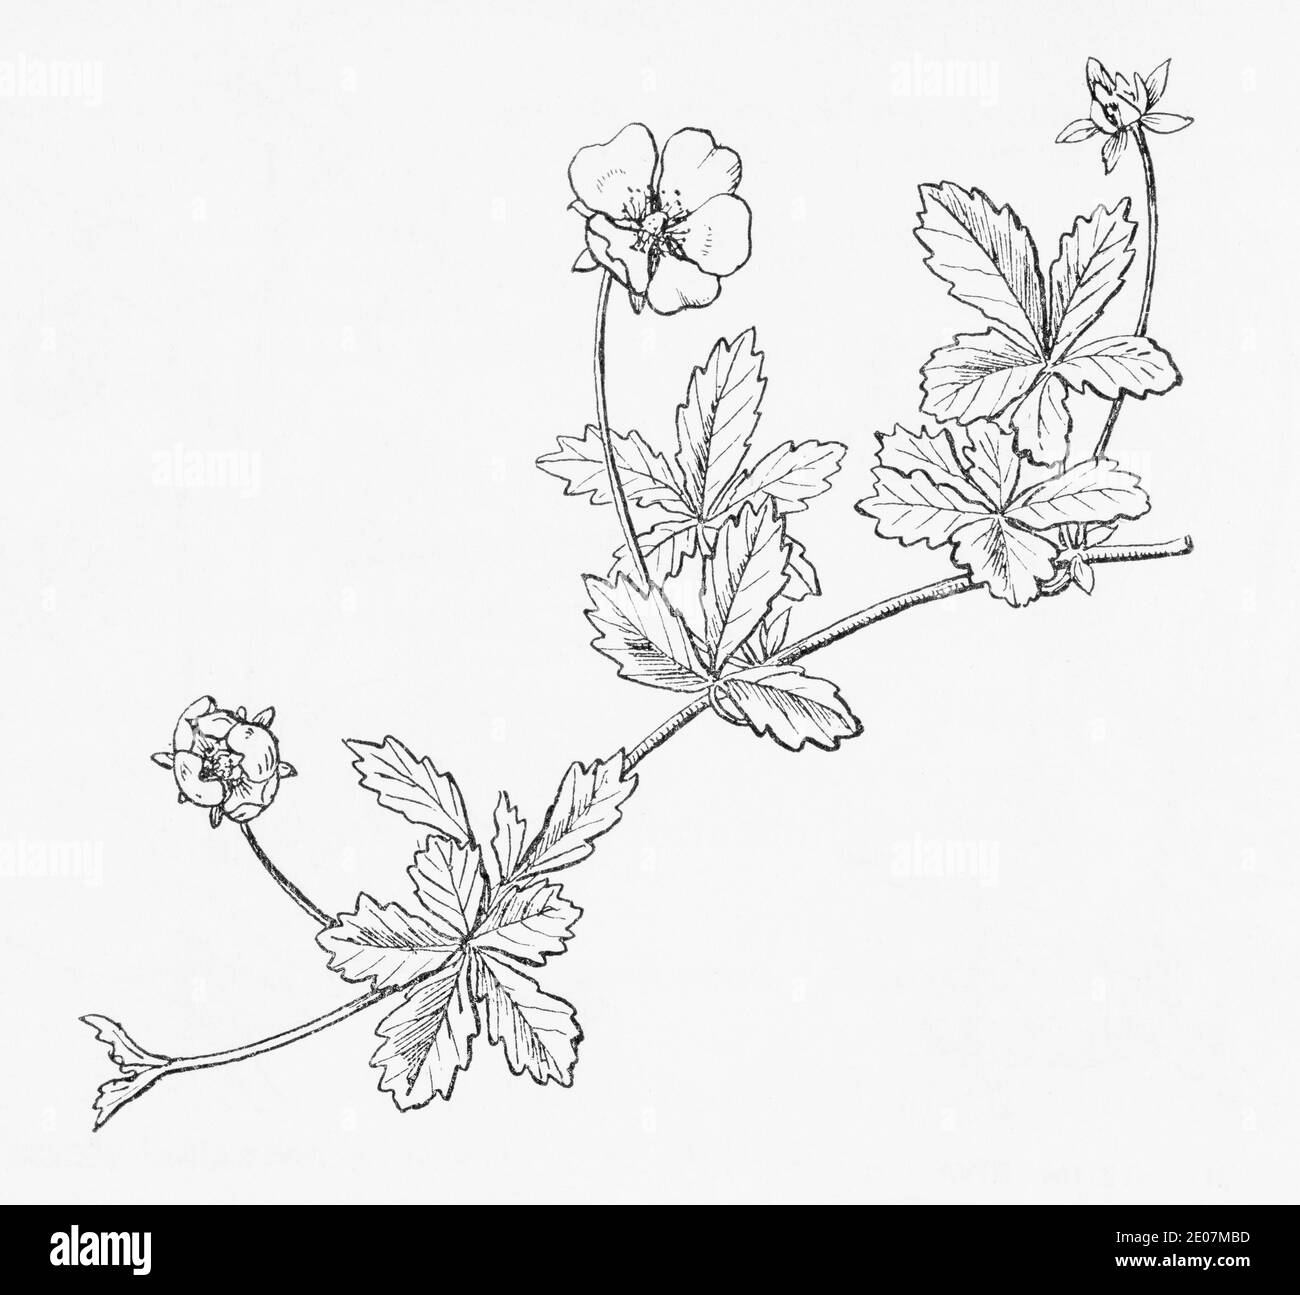 Old botanical illustration engraving of Creeping Cinque-foil / Potentilla reptans. Traditional medicinal herbal plant. See Notes Stock Photo